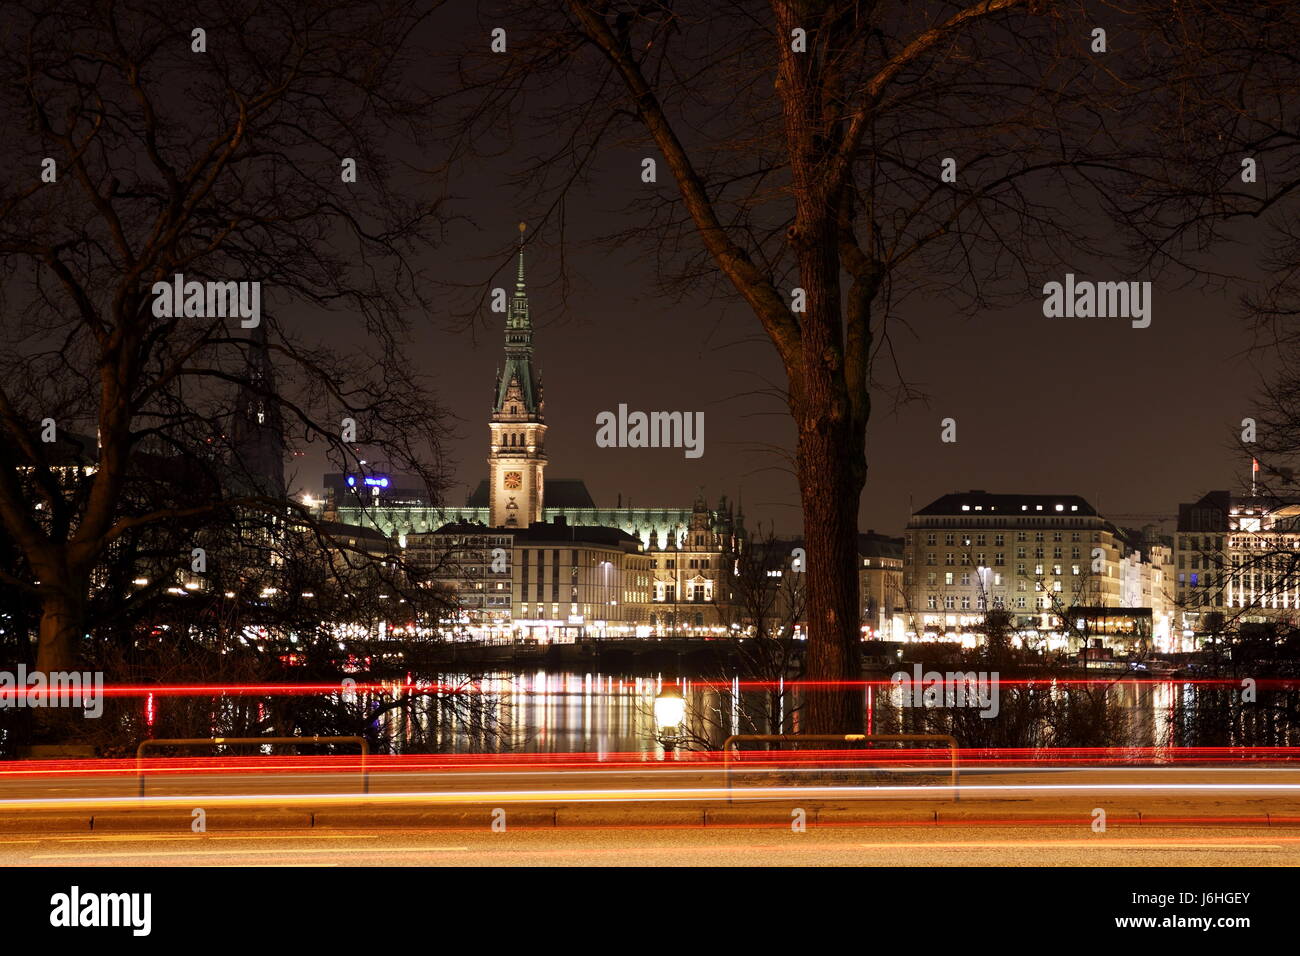 night nighttime night photograph hamburg town hall tower city town metropolis Stock Photo